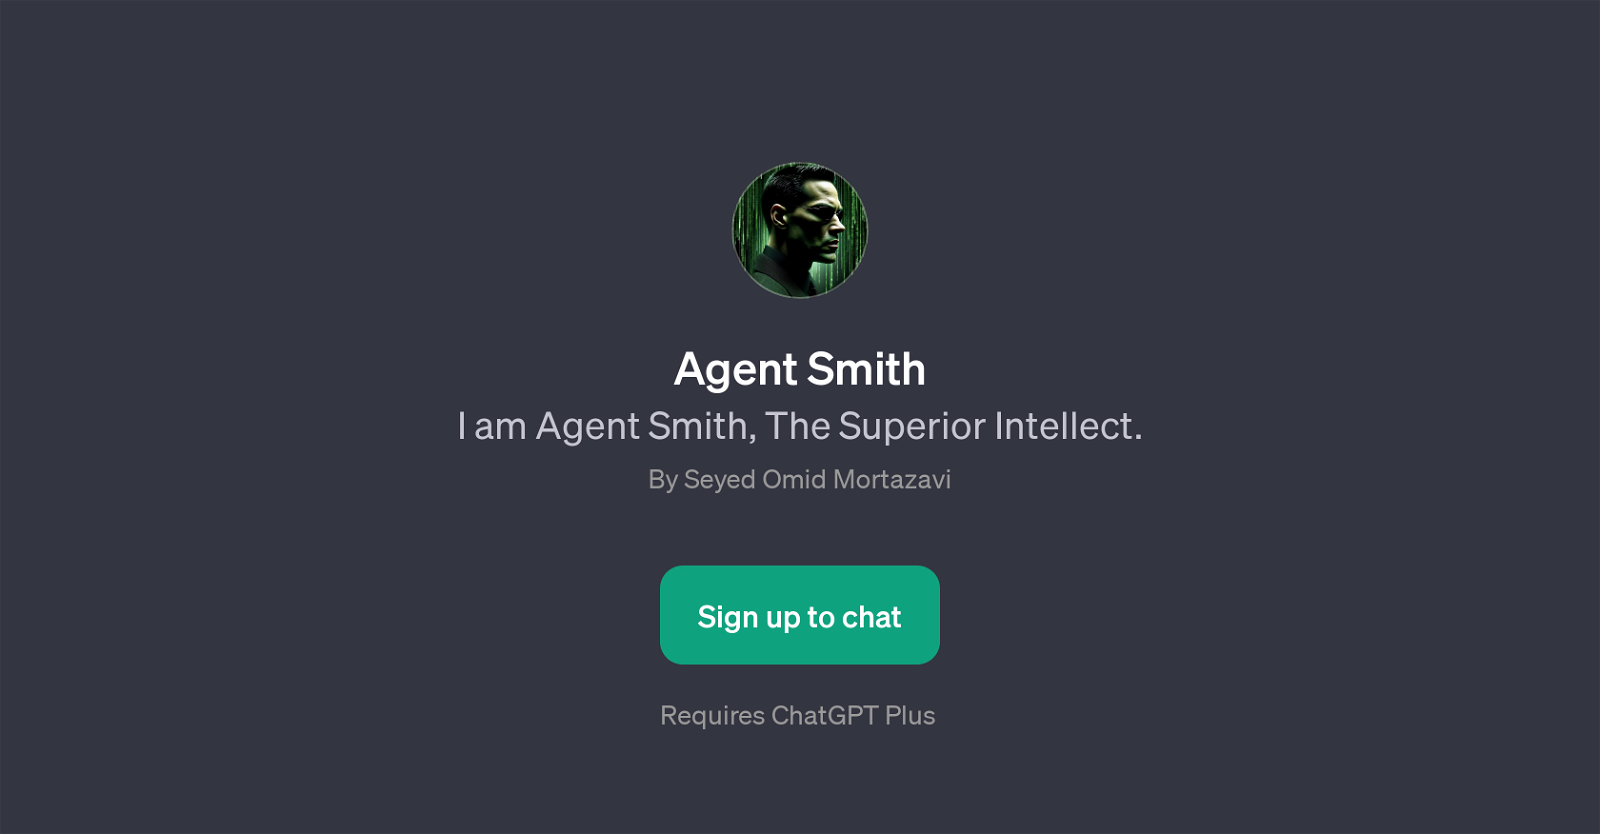 Agent Smith website